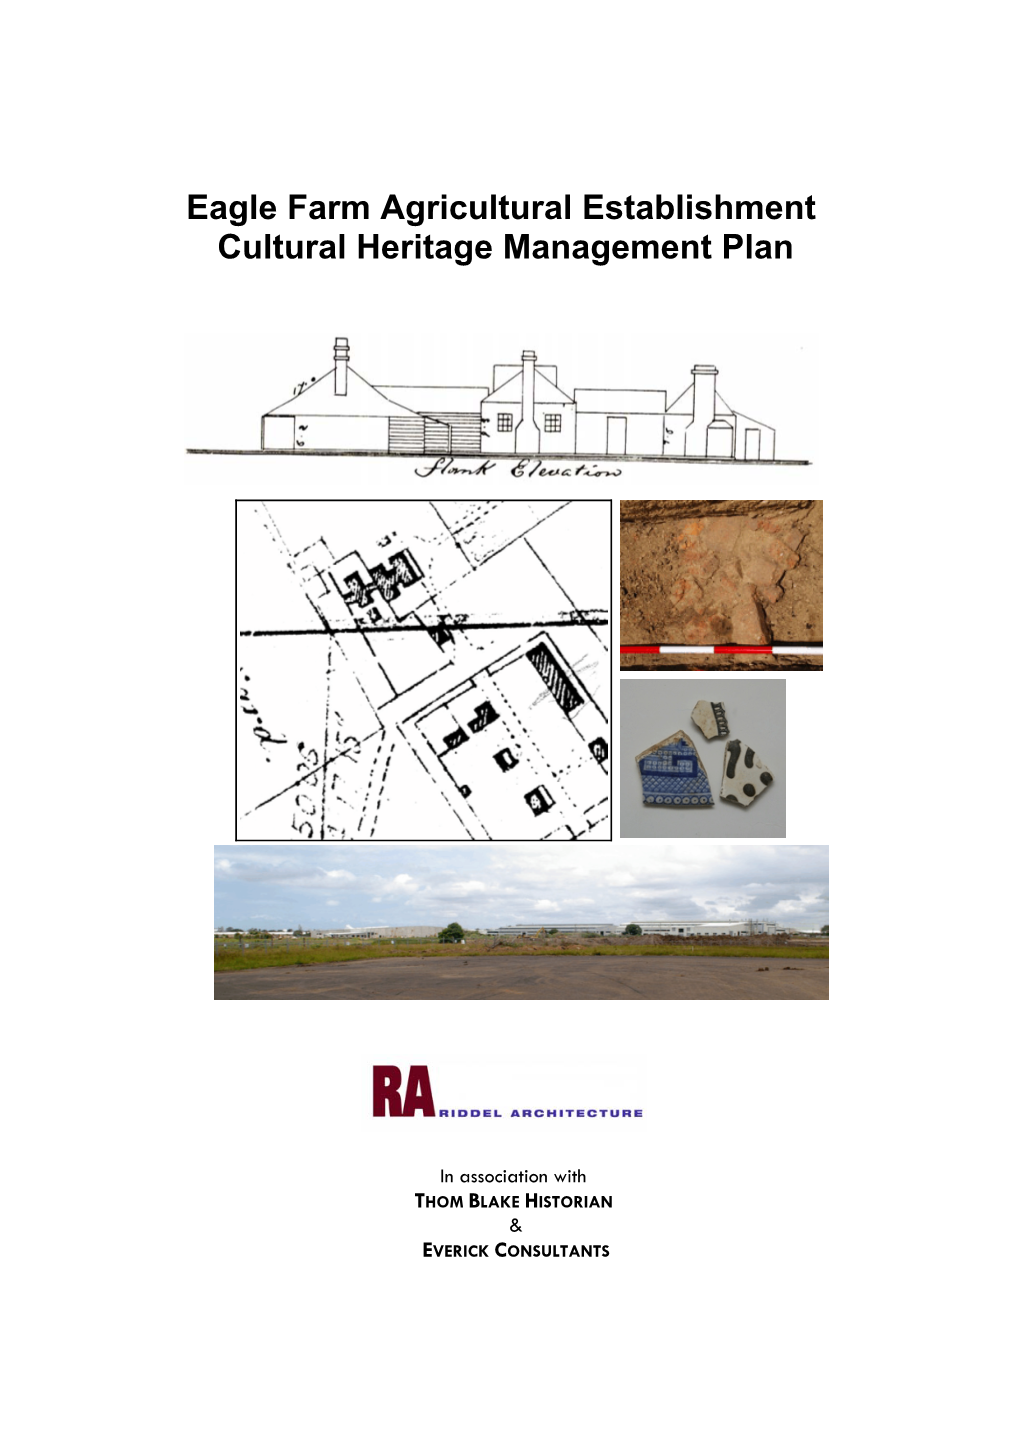 Eagle Farm Agricultural Establishment Cultural Heritage Management Plan